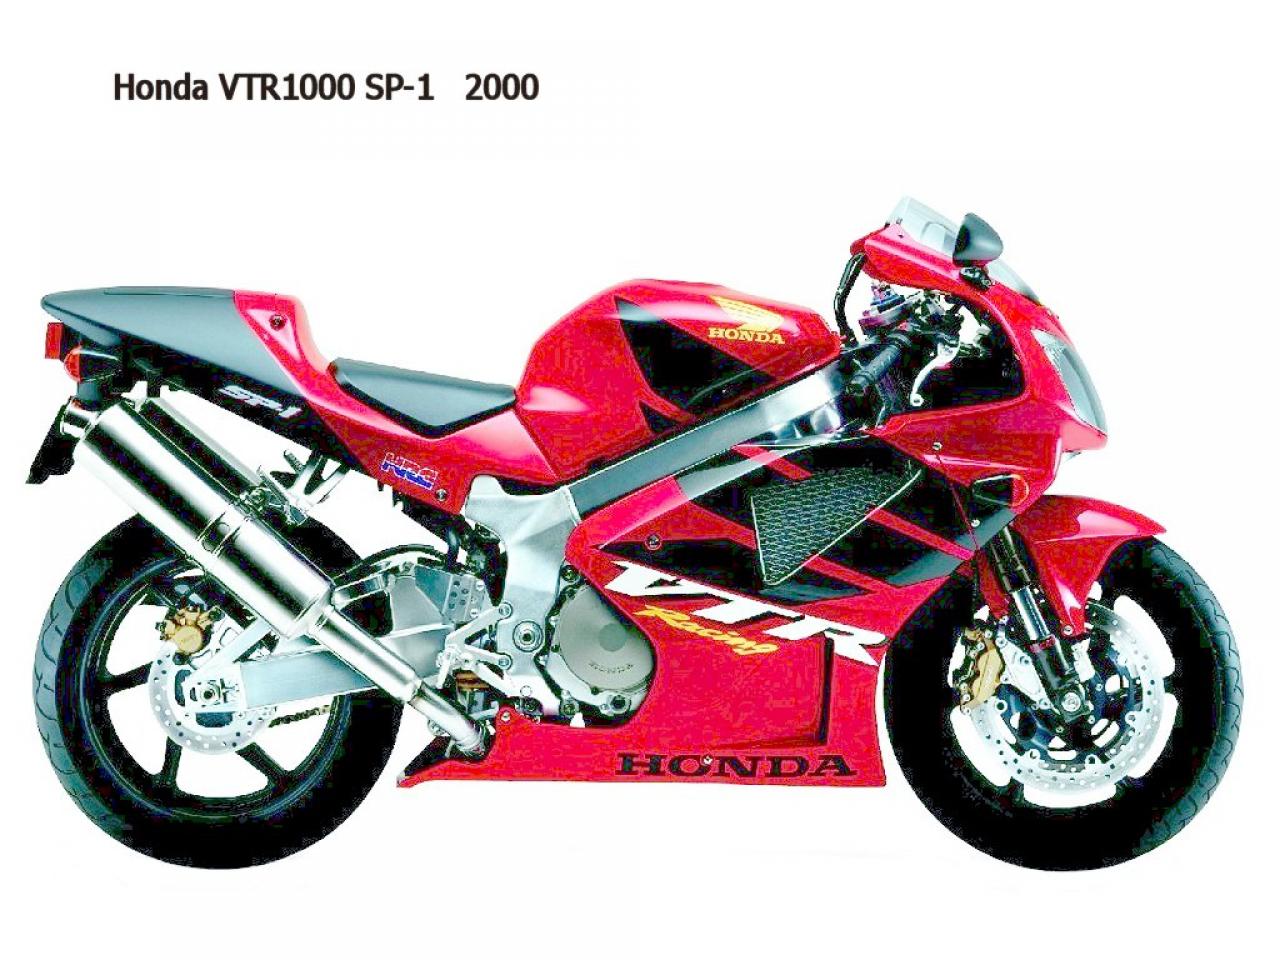 Honda VTR 1000 SP-1 2000 photo - 5